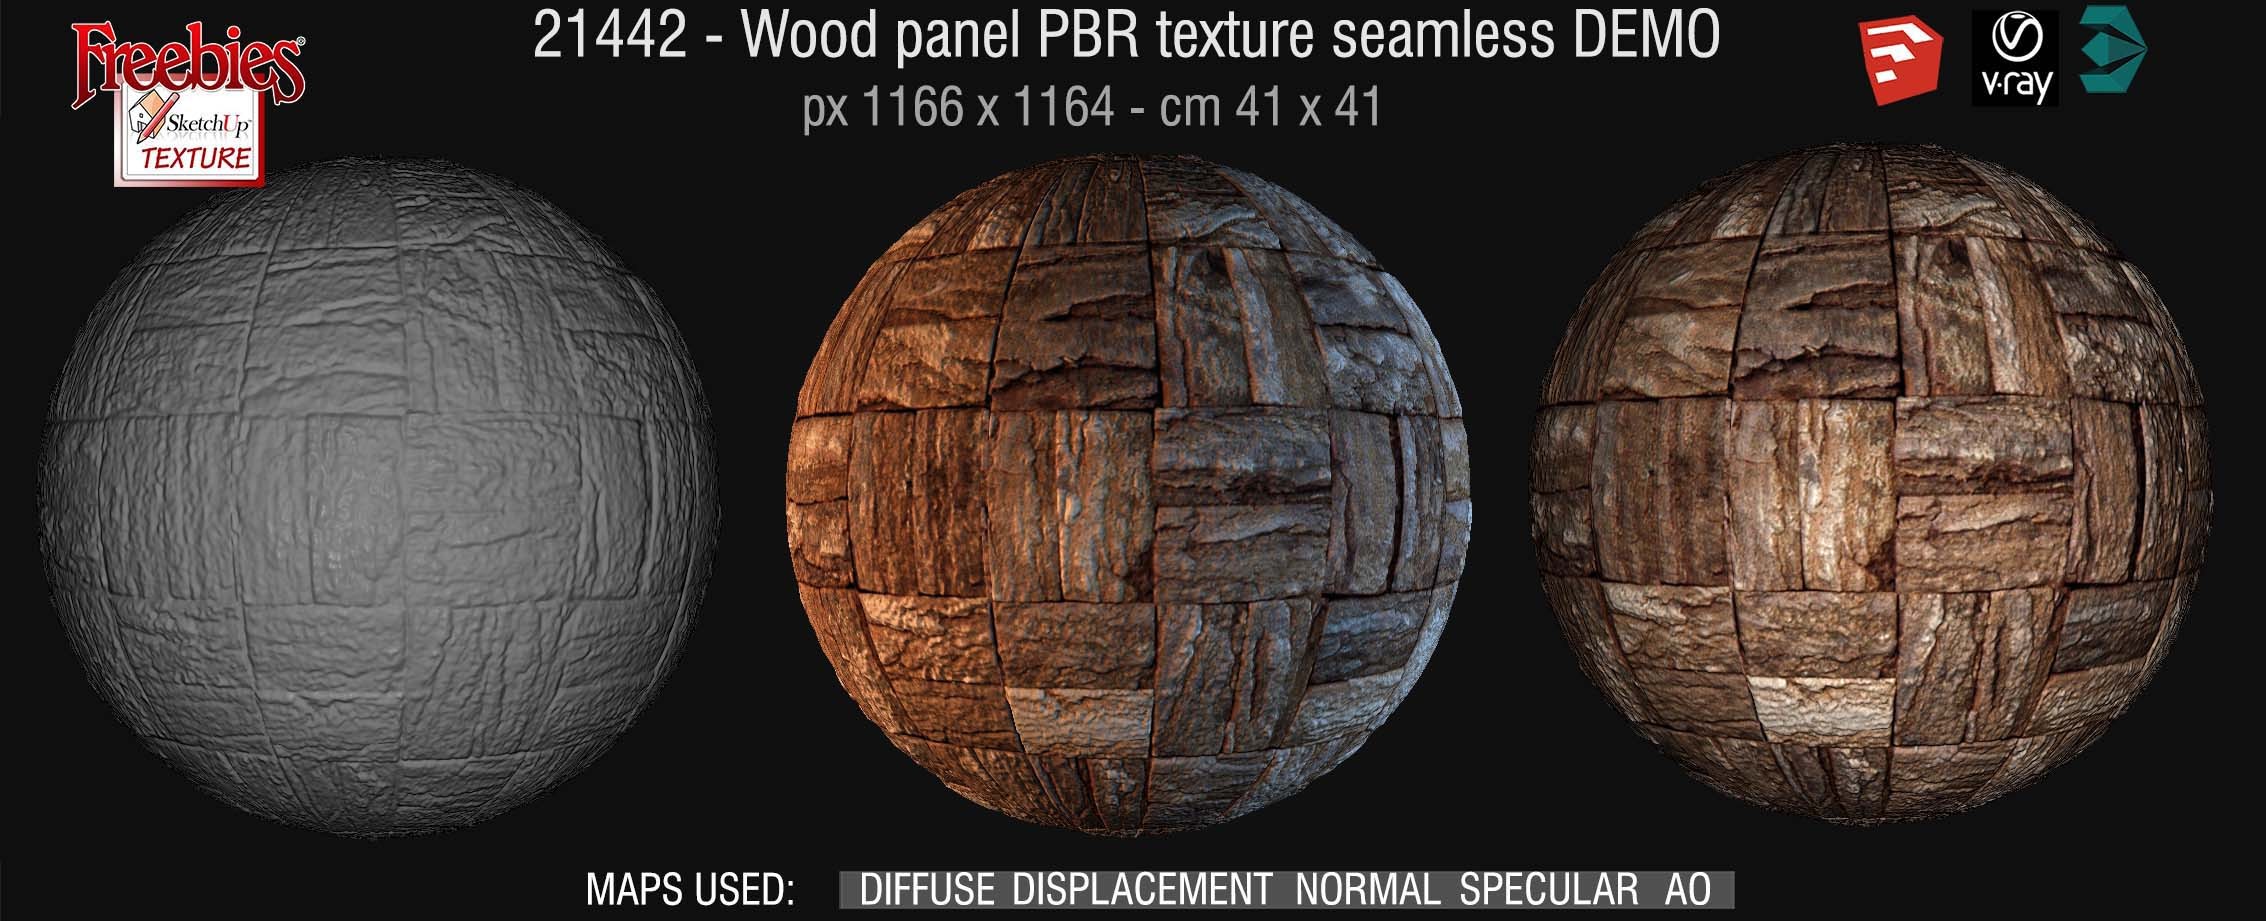 21442 wood panel PBR texture seamless DEMO